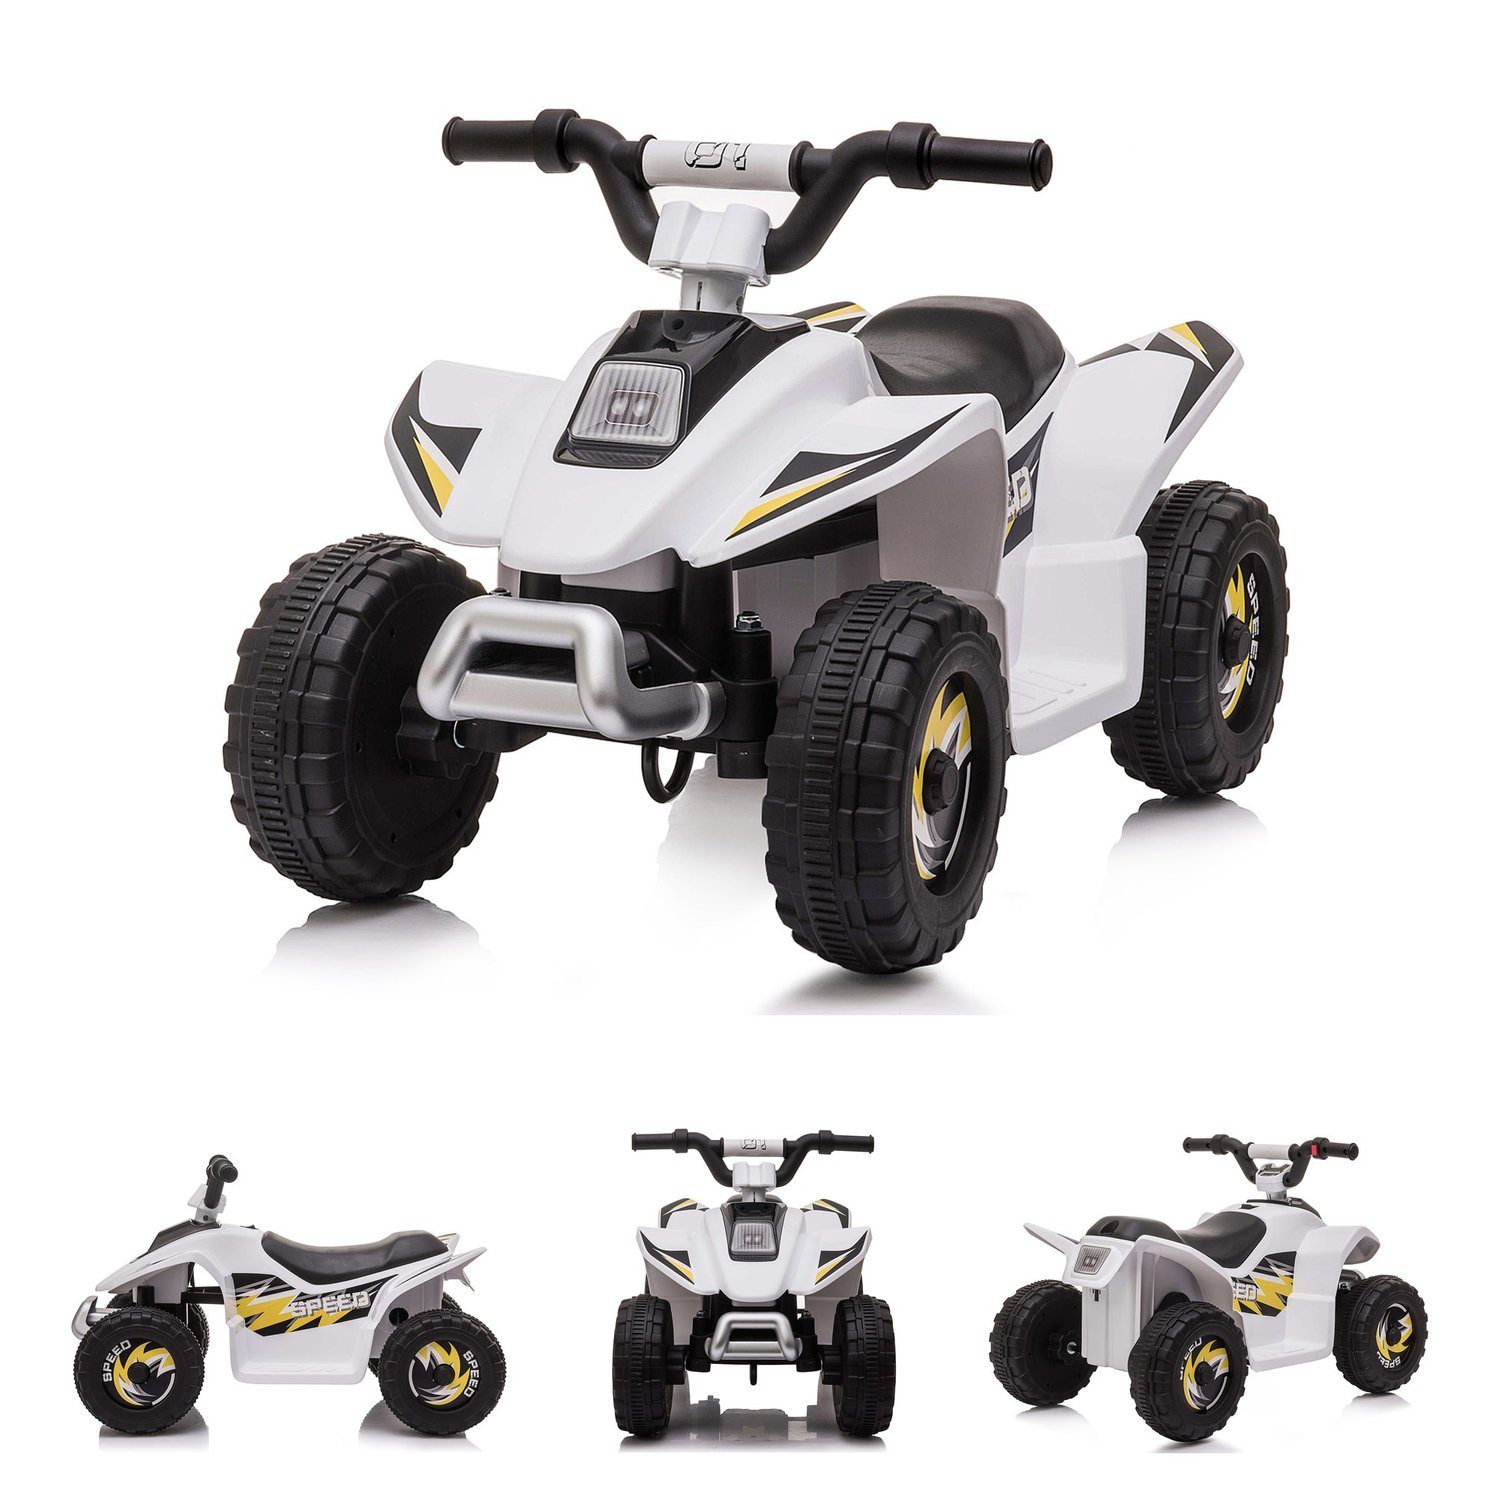 Kindersitz Standard für Quad / ATV, Roller